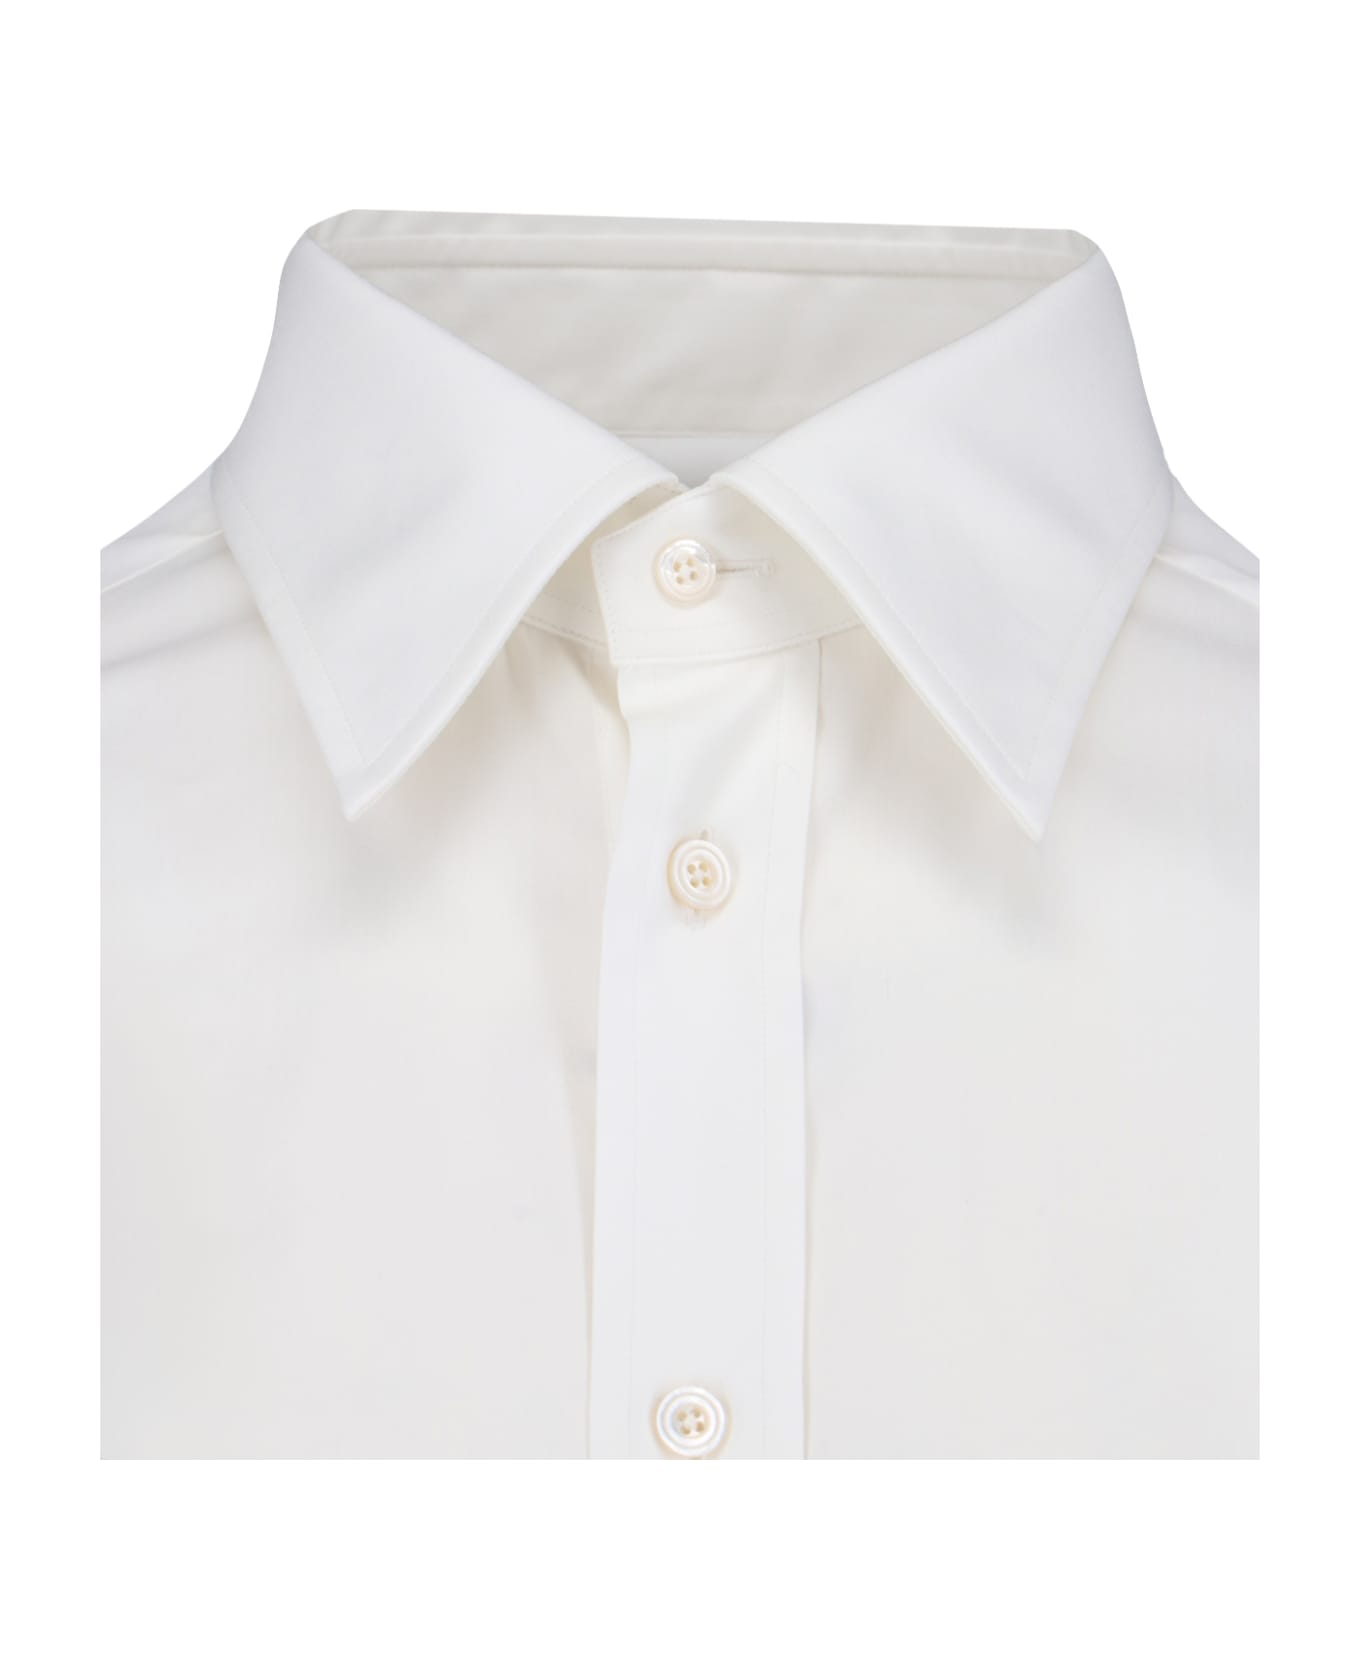 Tom Ford Classic Shirt - White シャツ